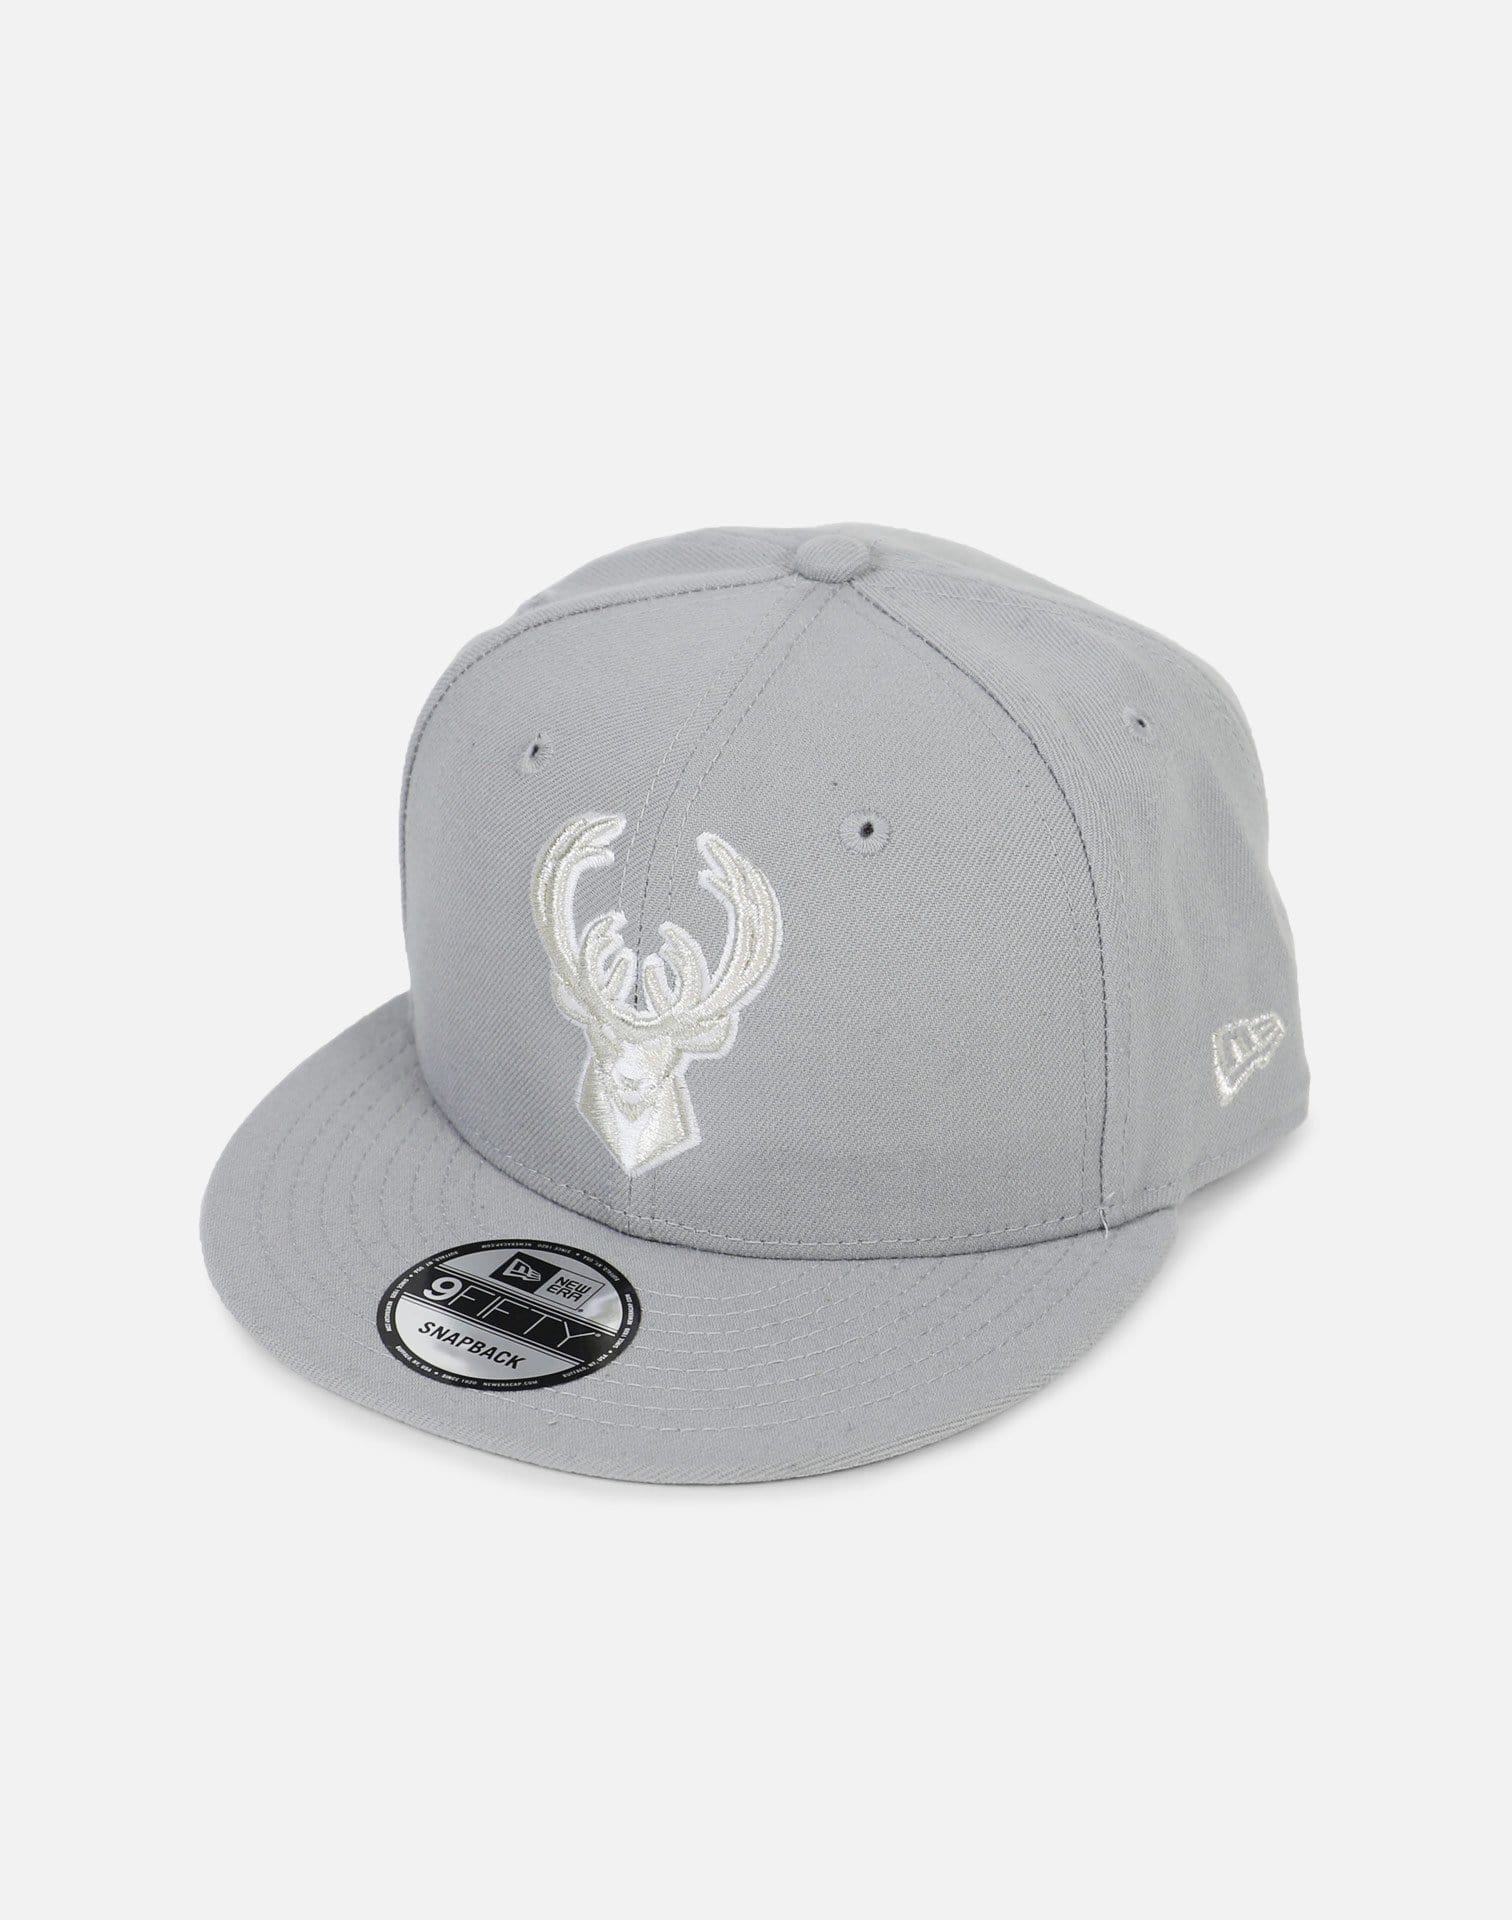 New Era Milwaukee Bucks 'Pure Bucks' Snapback Hat